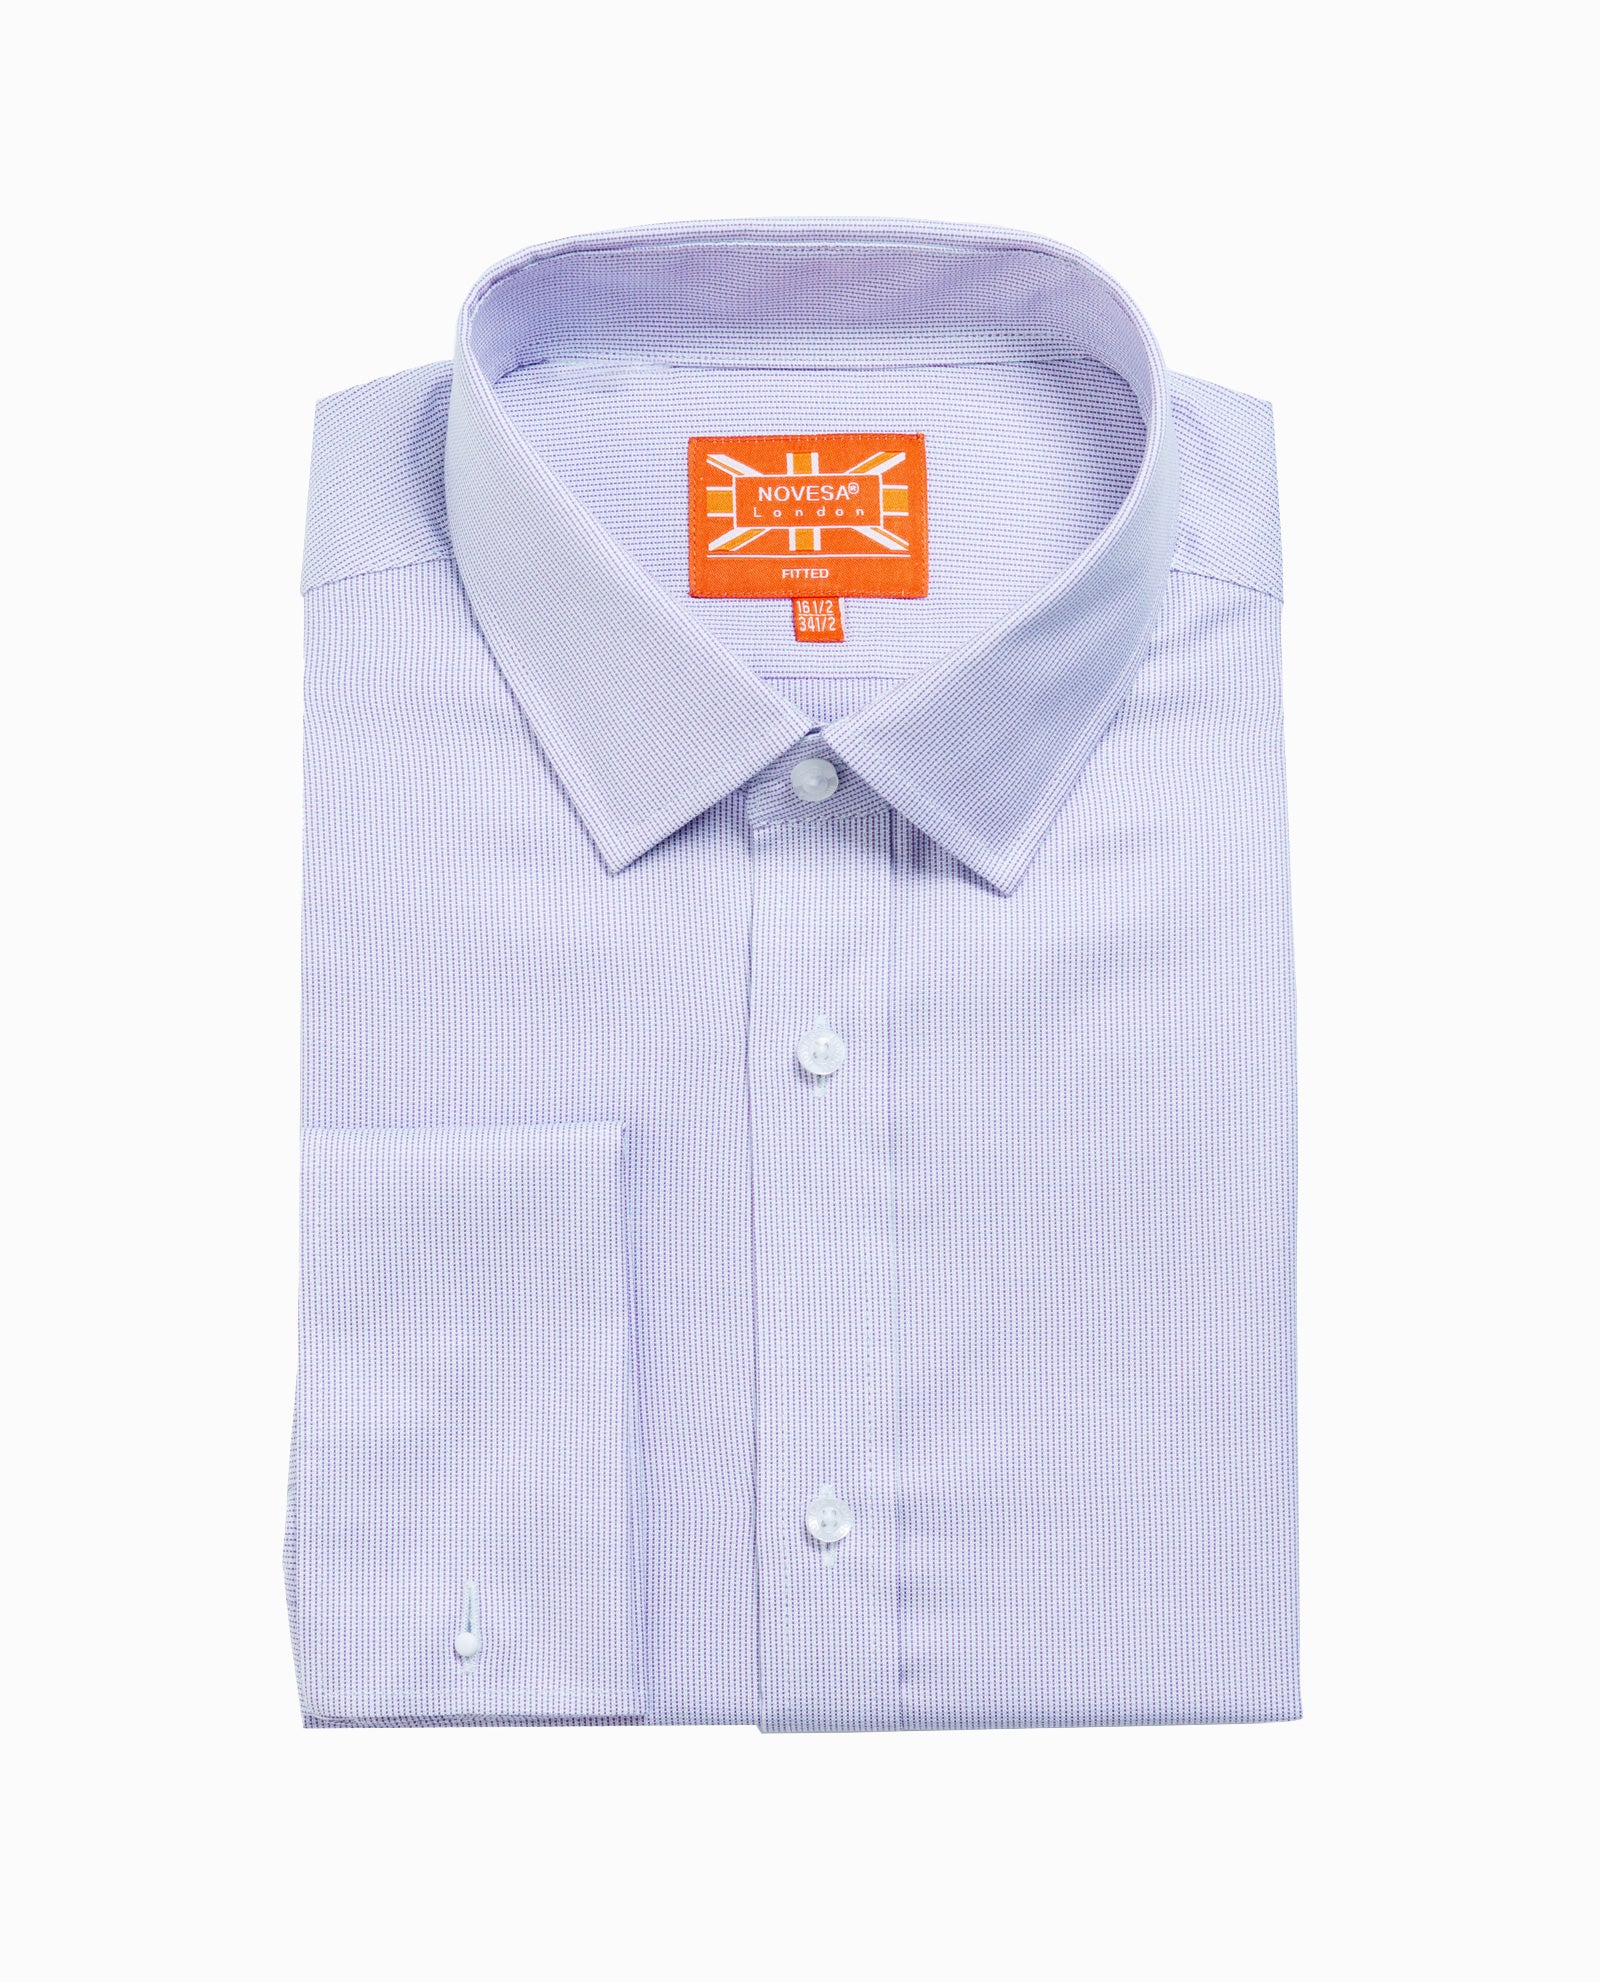 Lavender Twill Mens Dress Shirt